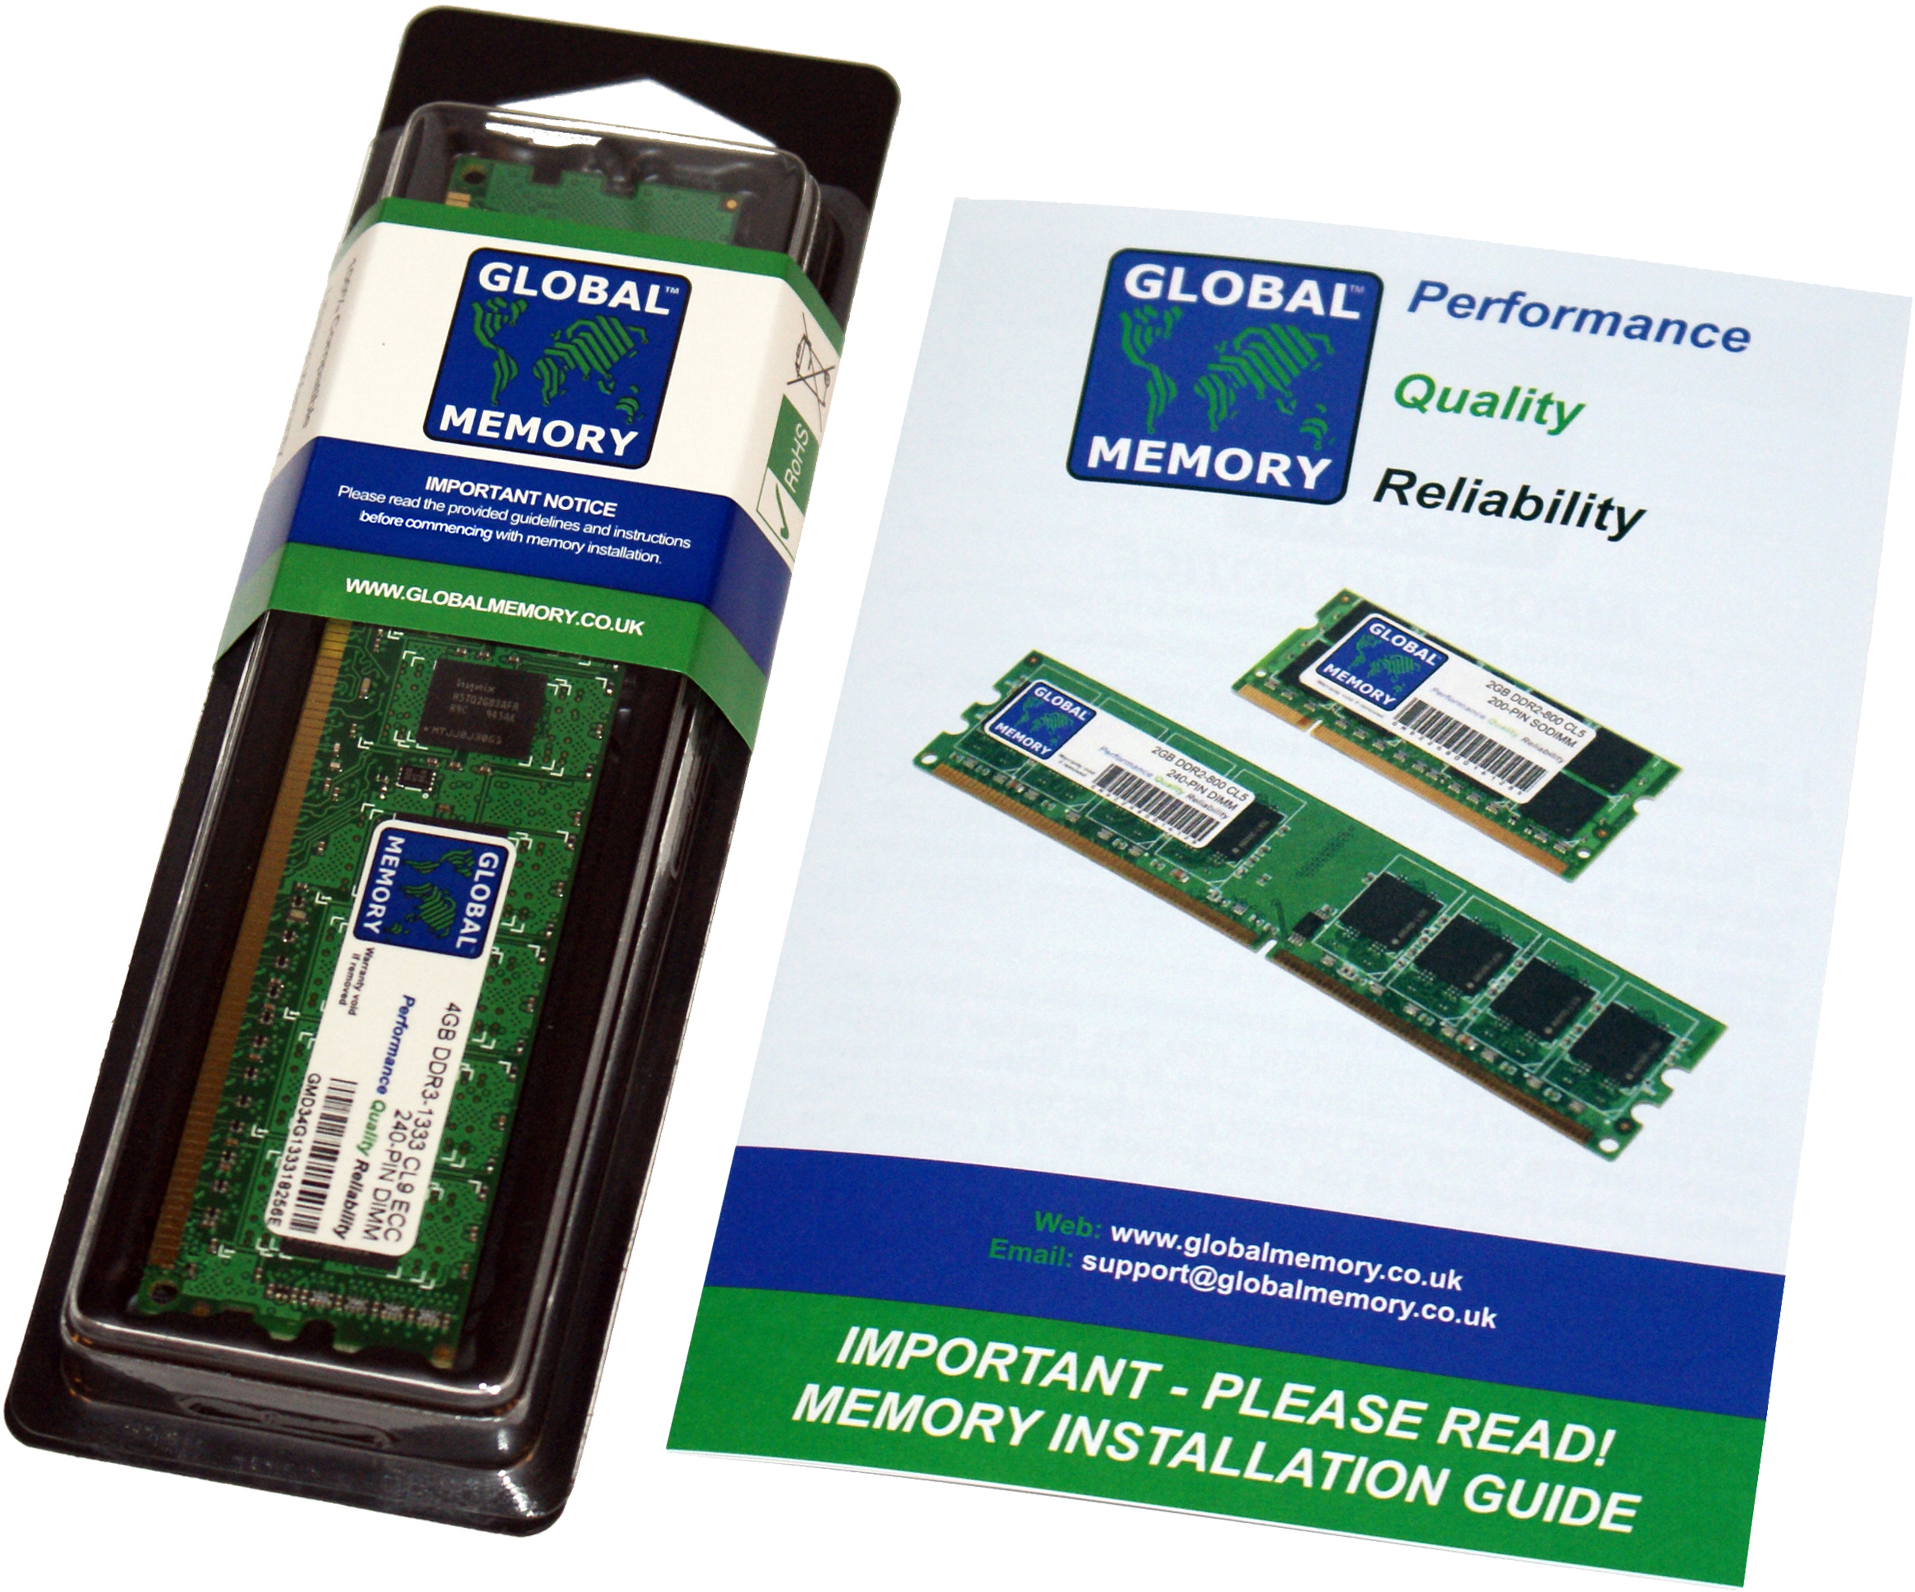 16GB DDR4 2400MHz PC4-19200 288-PIN ECC DIMM (UDIMM) MEMORY RAM FOR LENOVO SERVERS/WORKSTATIONS